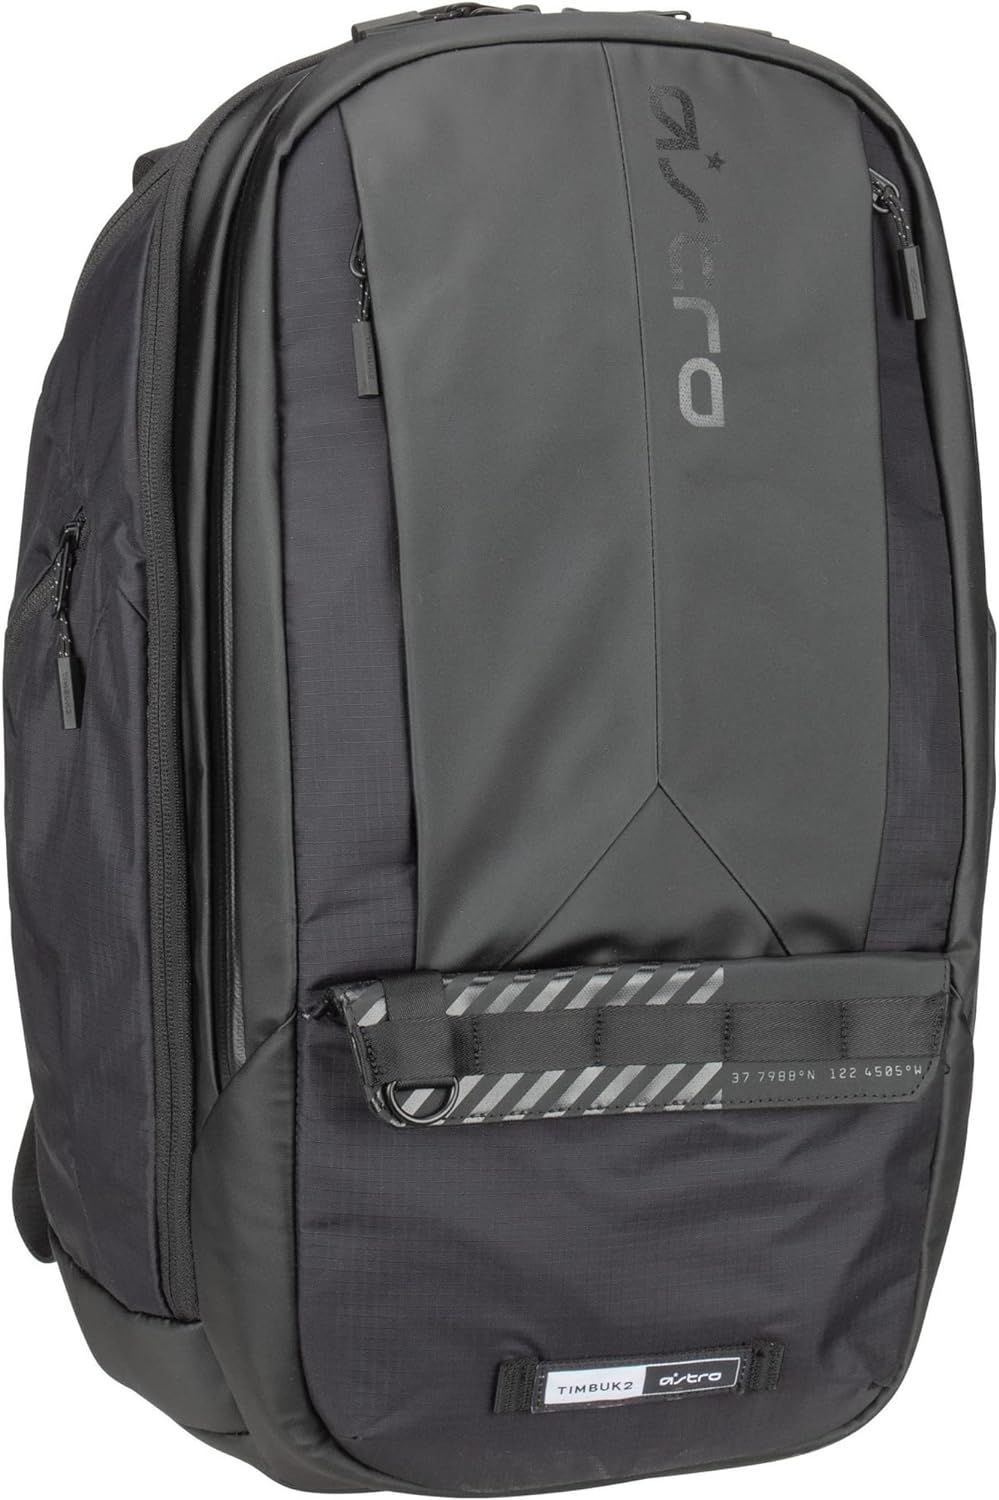 Timbuk2 x ASTRO Gaming BP35 Backpack